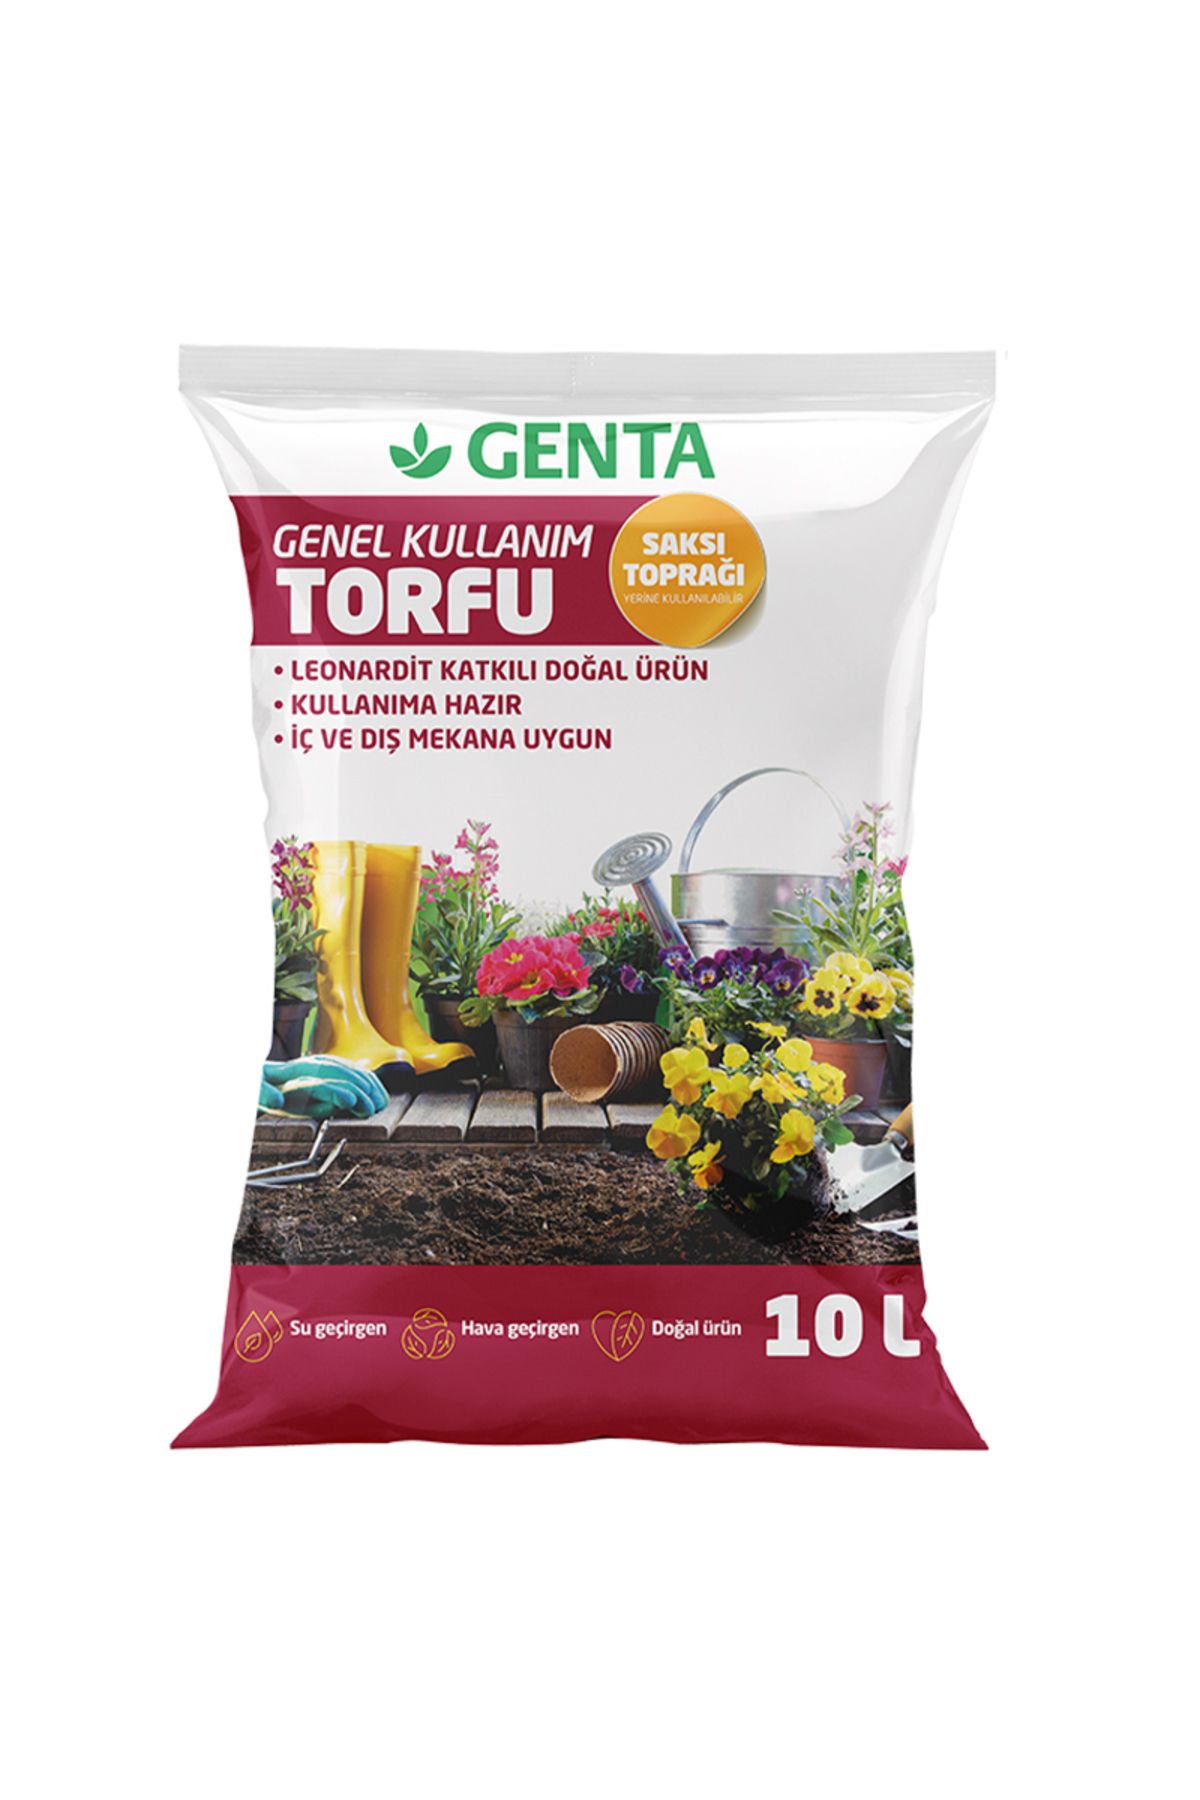 Genta Genel Kullanım Torfu 10 Lt.